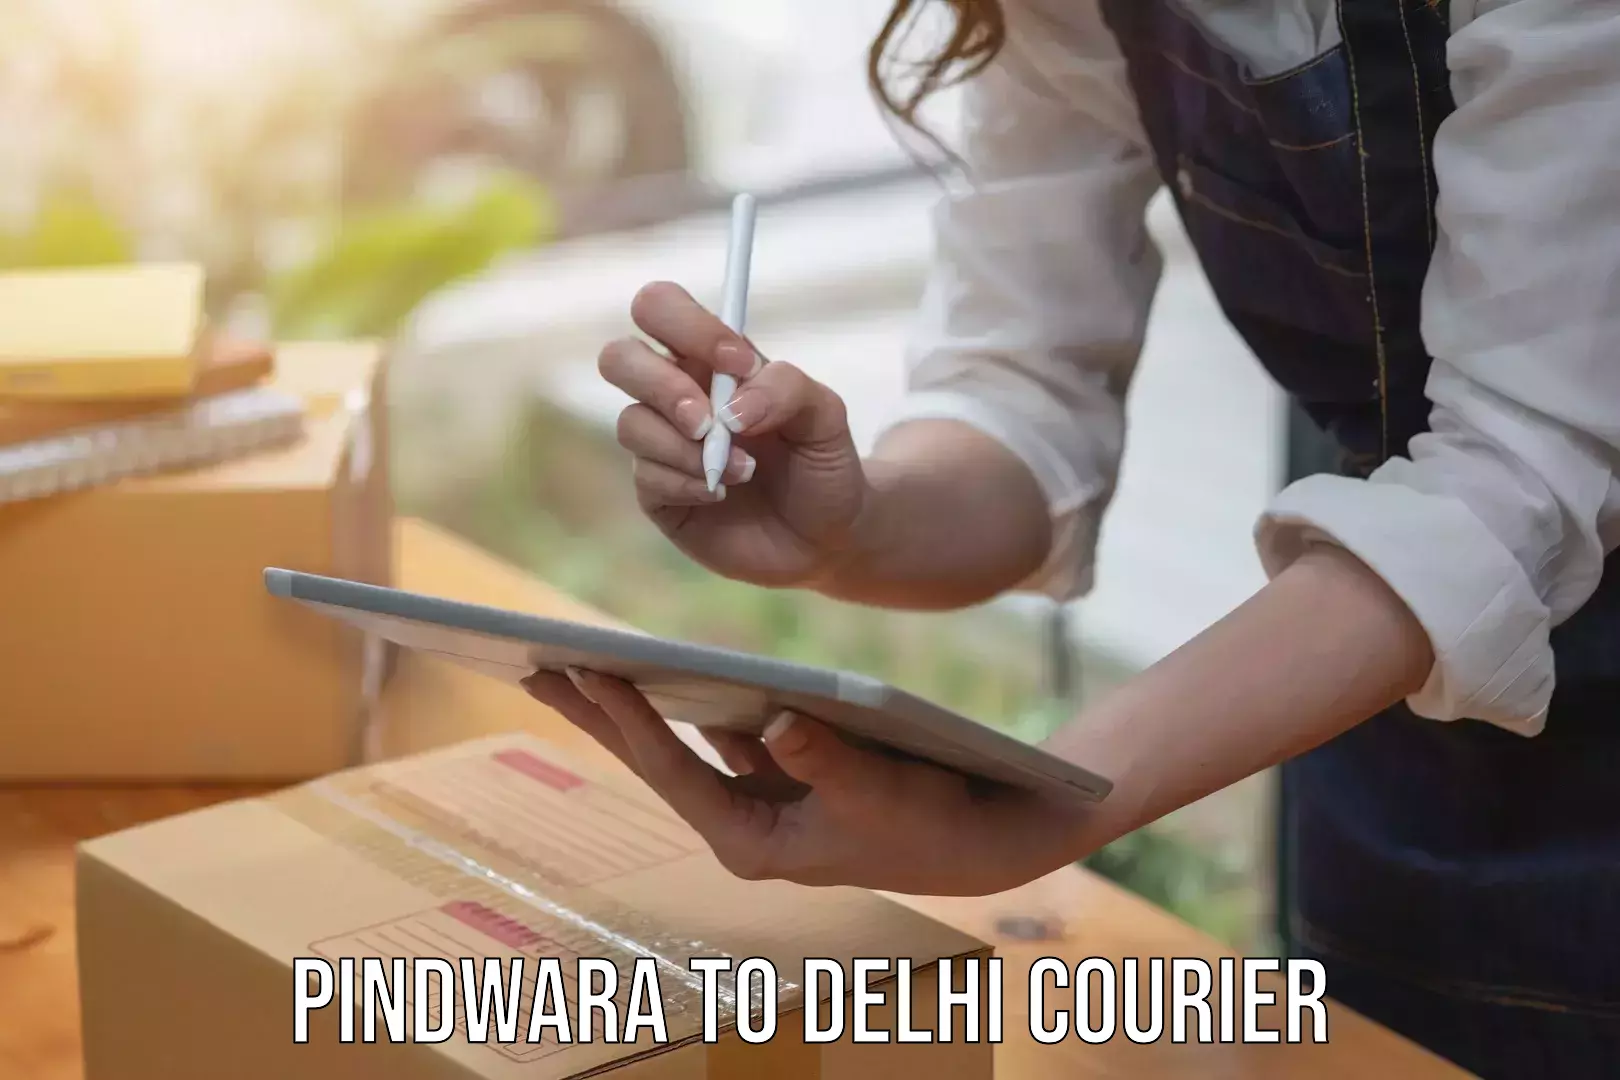 Courier service partnerships in Pindwara to University of Delhi